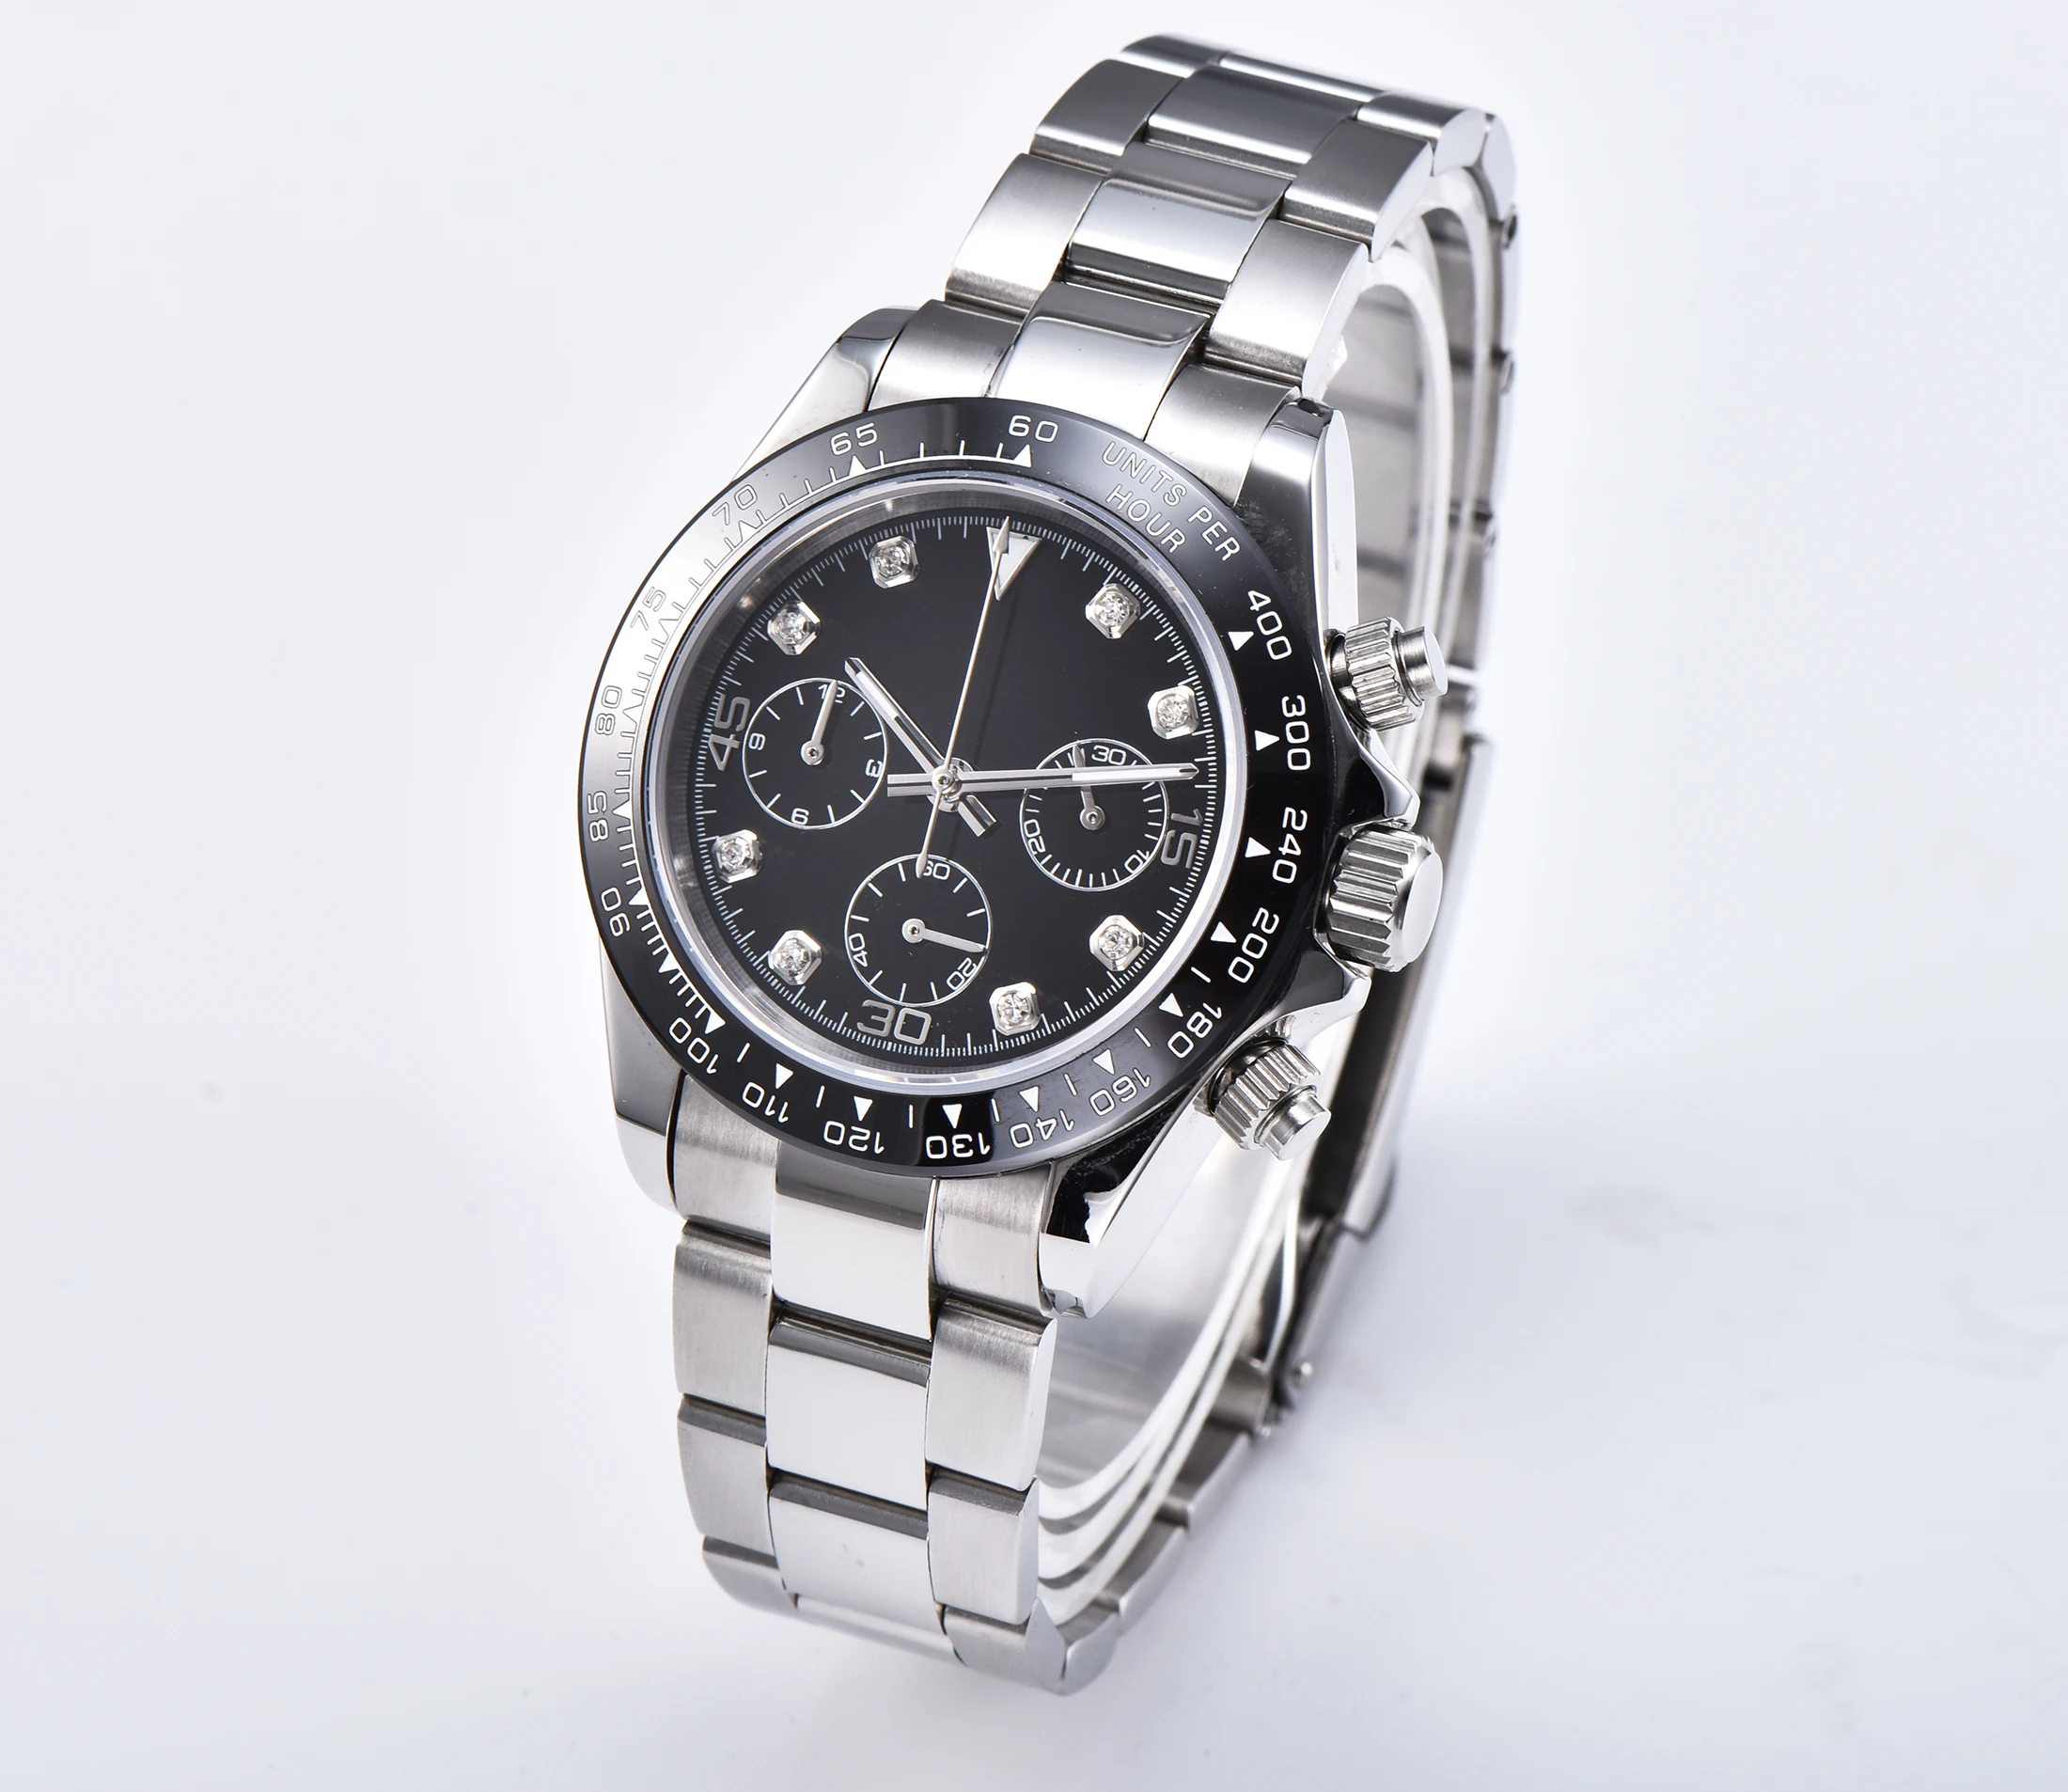 Watch men's chronograph bomax marina quartz new 100% sapphire glass Luminous HandsVK63 movement 39 mm steel bracelet 82411